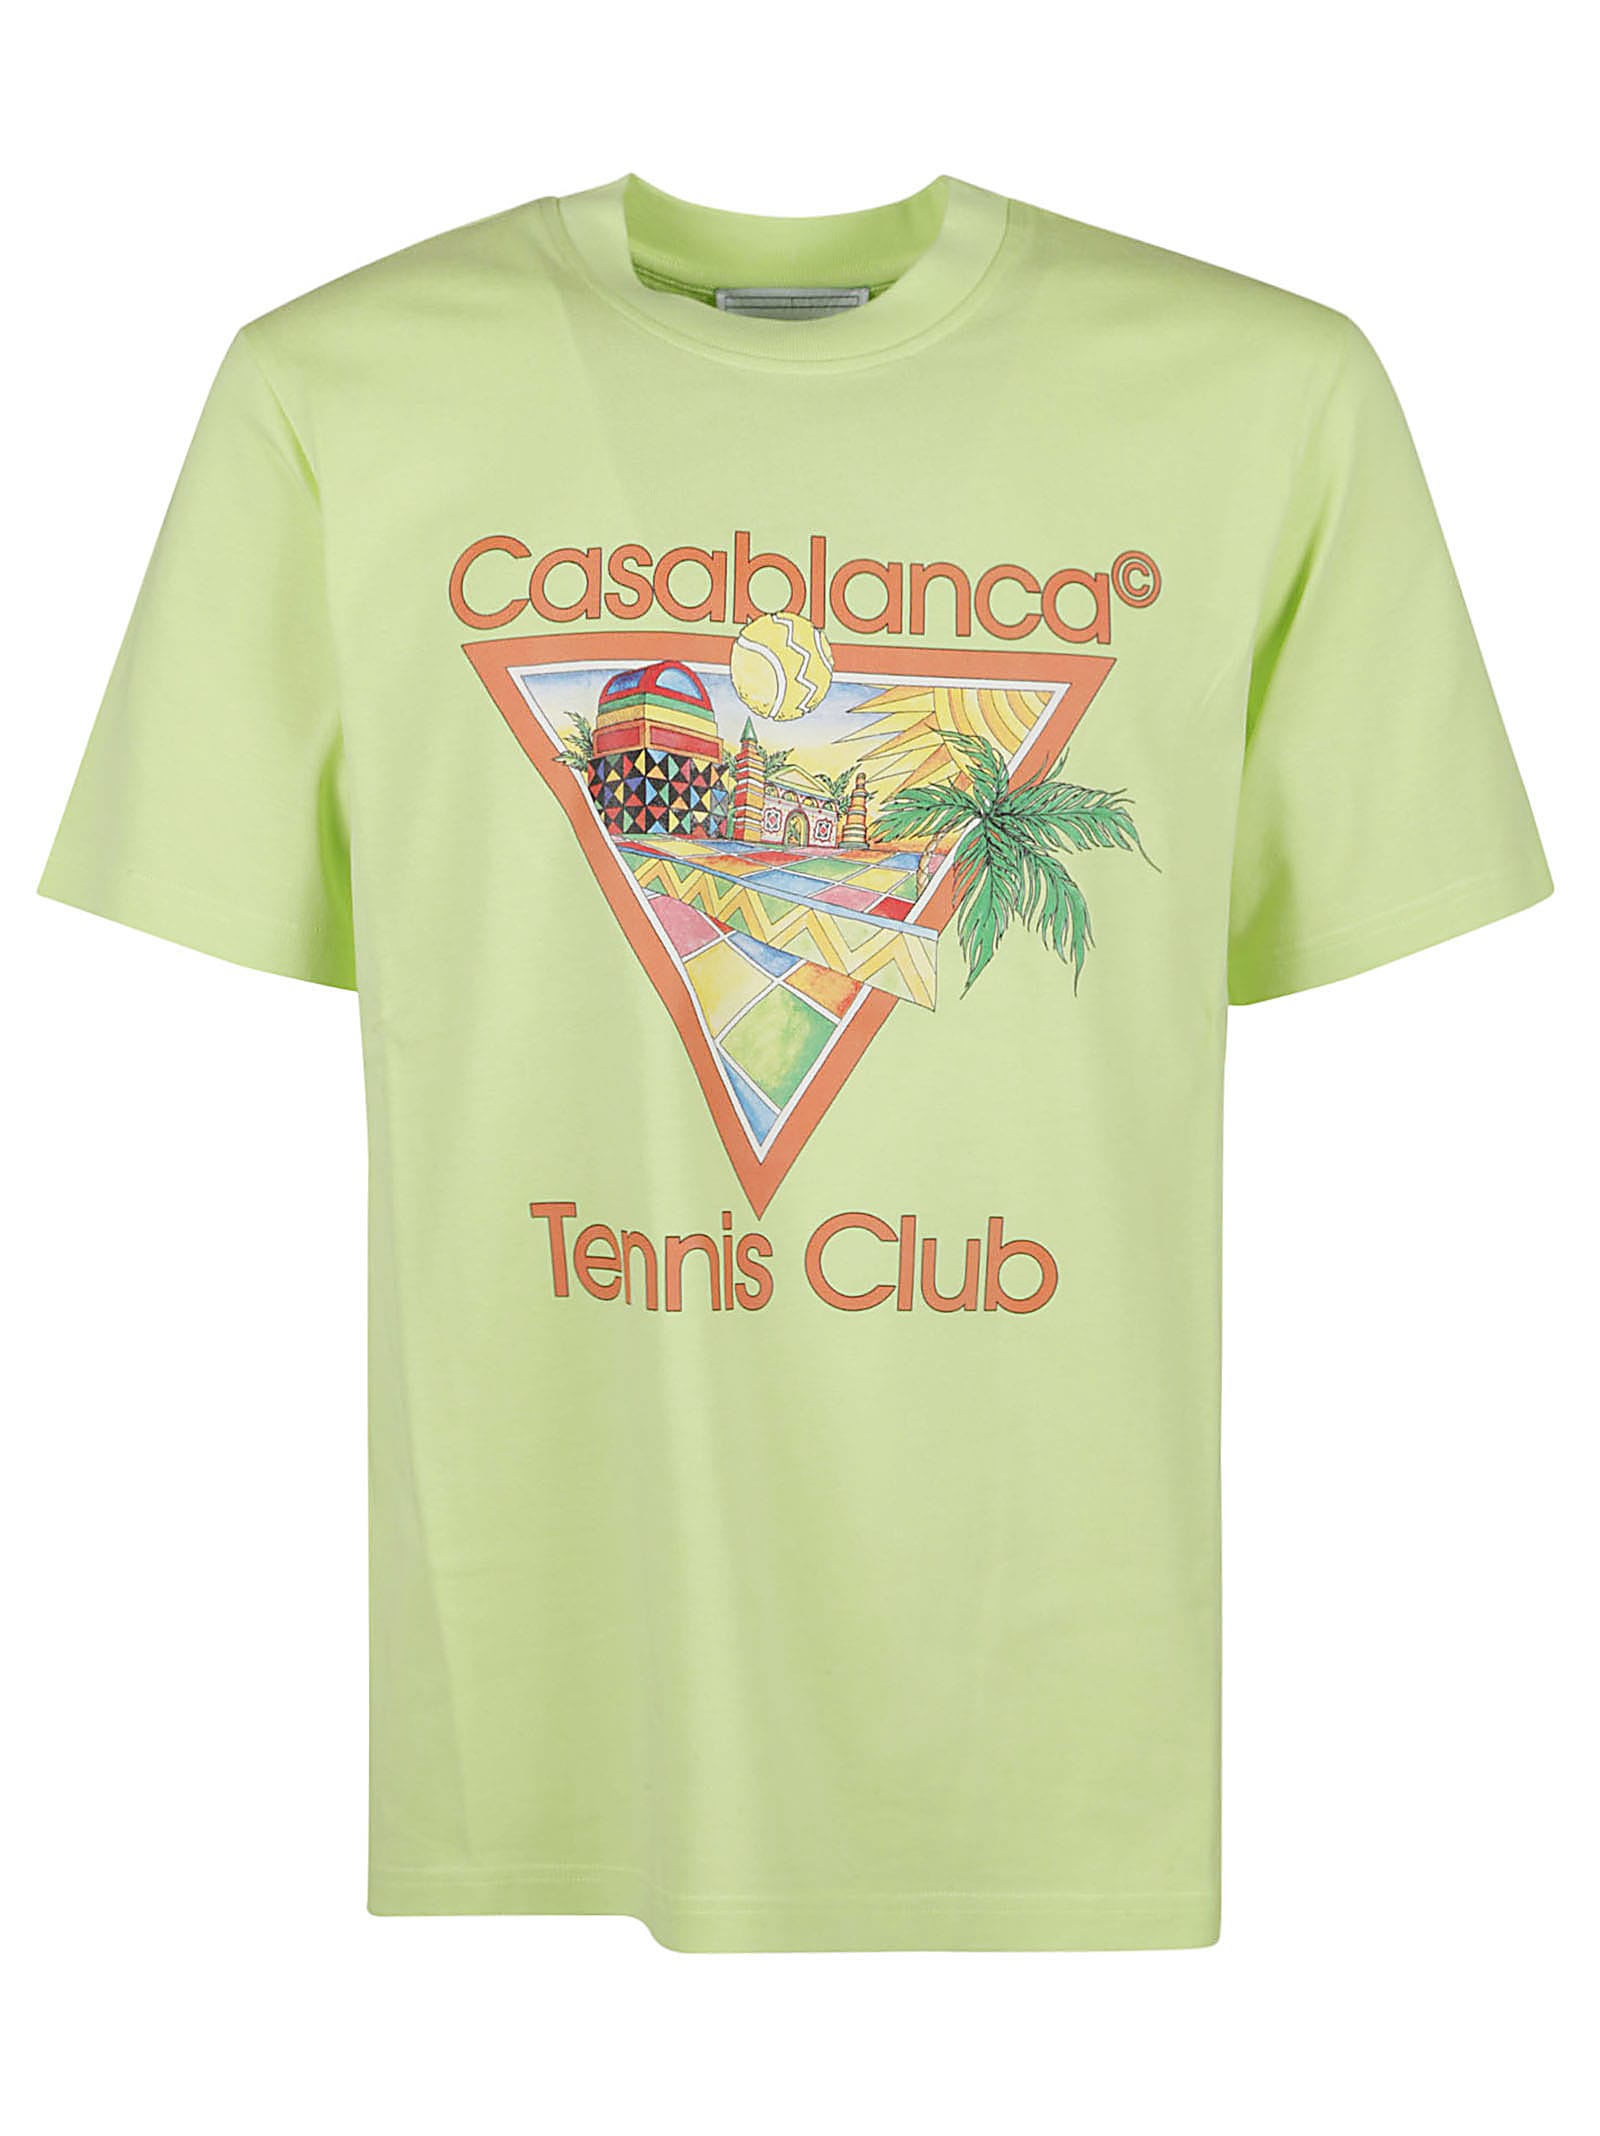 Afro Cubism Tennis Club Printed T-shirt